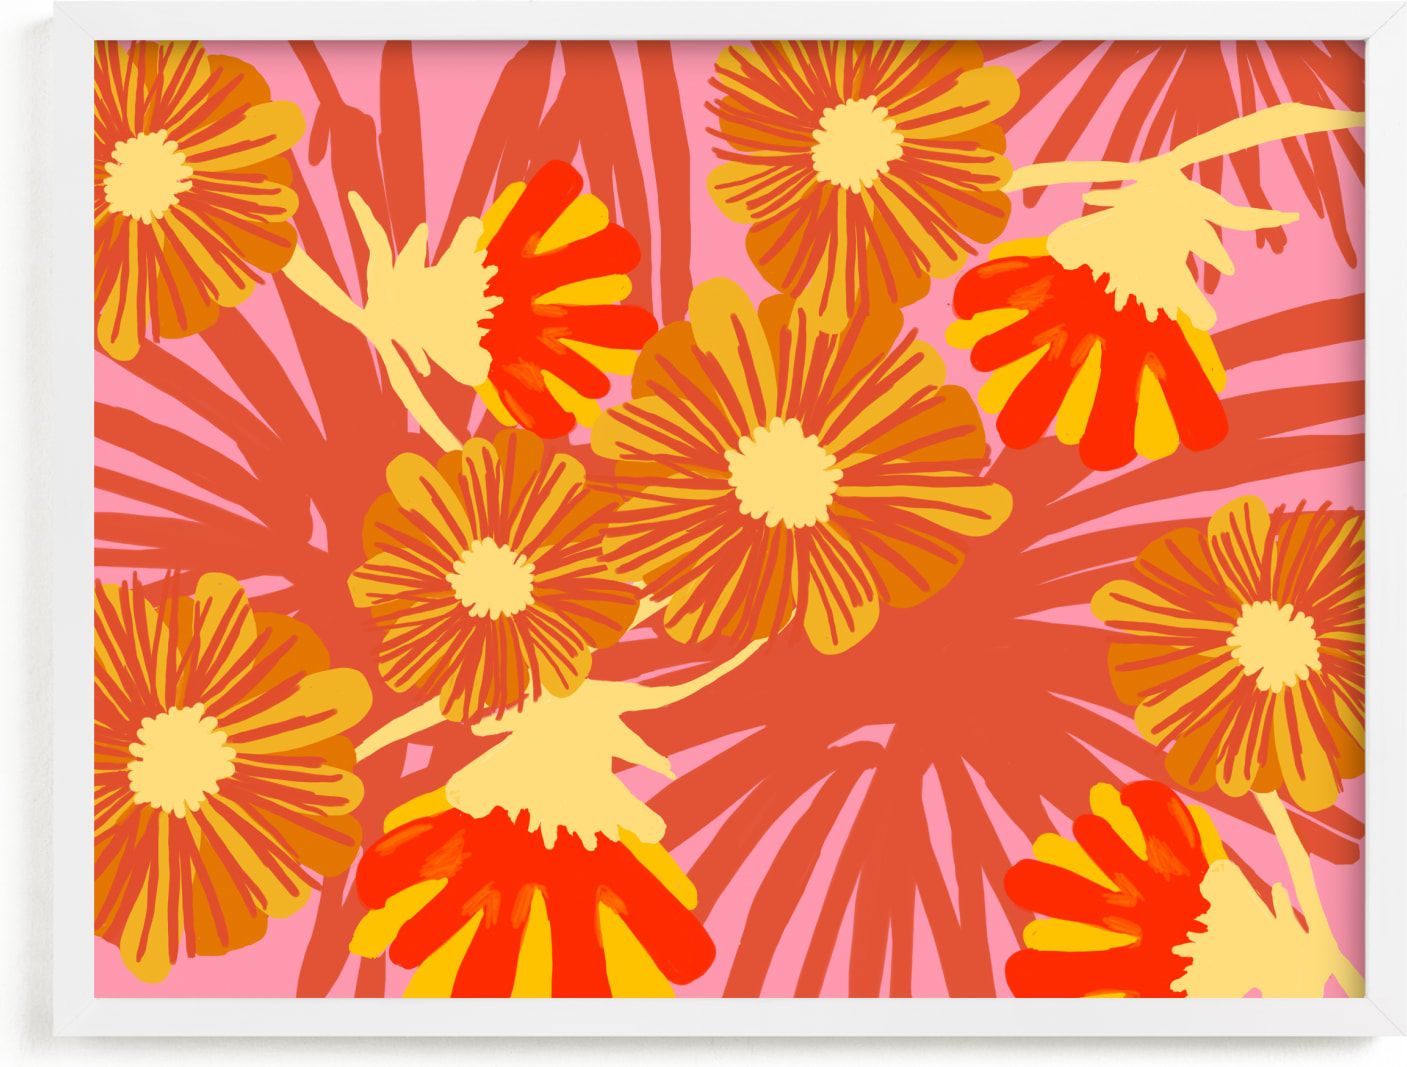 This is a yellow, pink, orange art by Deborah Velasquez called Electric Bloom.